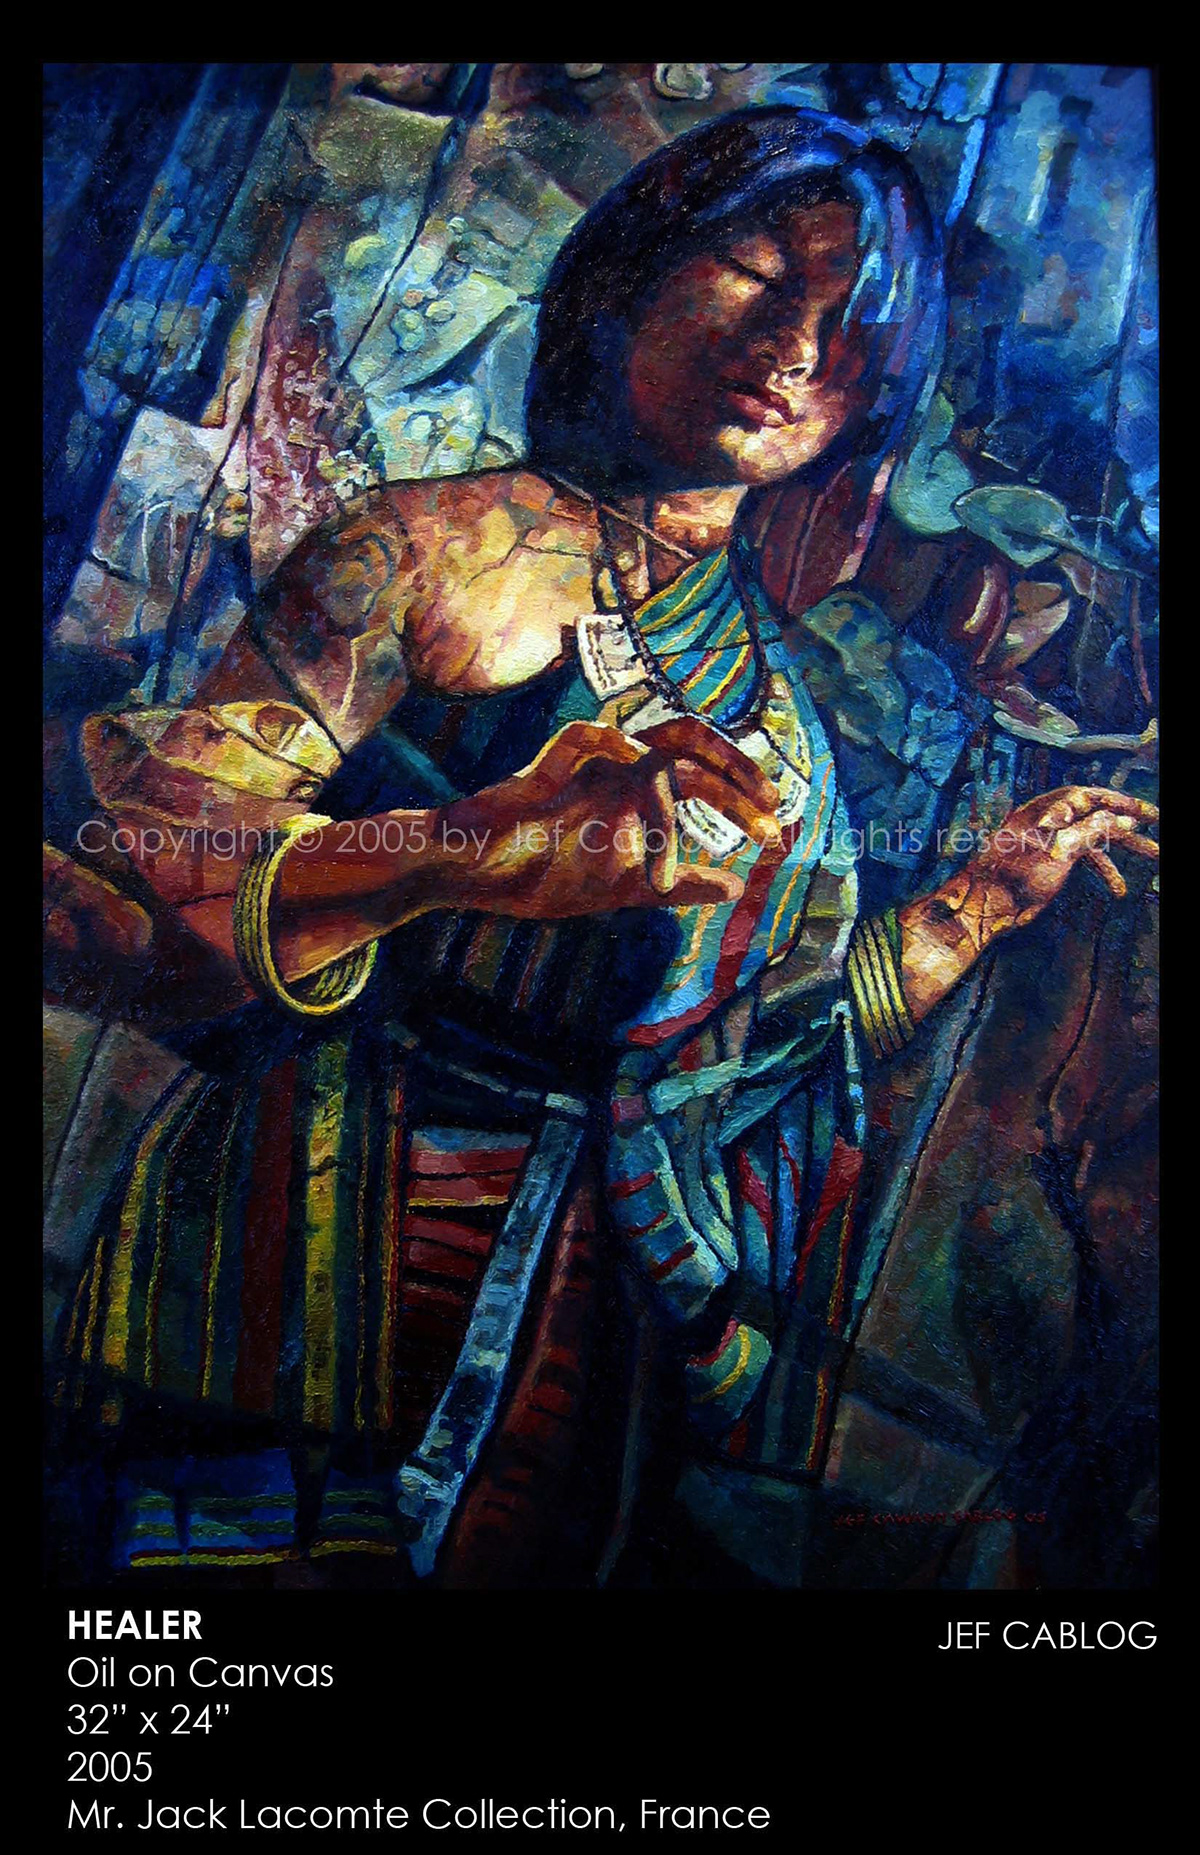 jef cablog  jef cawaon cablog  jefferson cablog  philippine art  filipino artist  baguio city  cordillera  barligmt. provinc Oil Painting  Contemporary Art oil on canvas